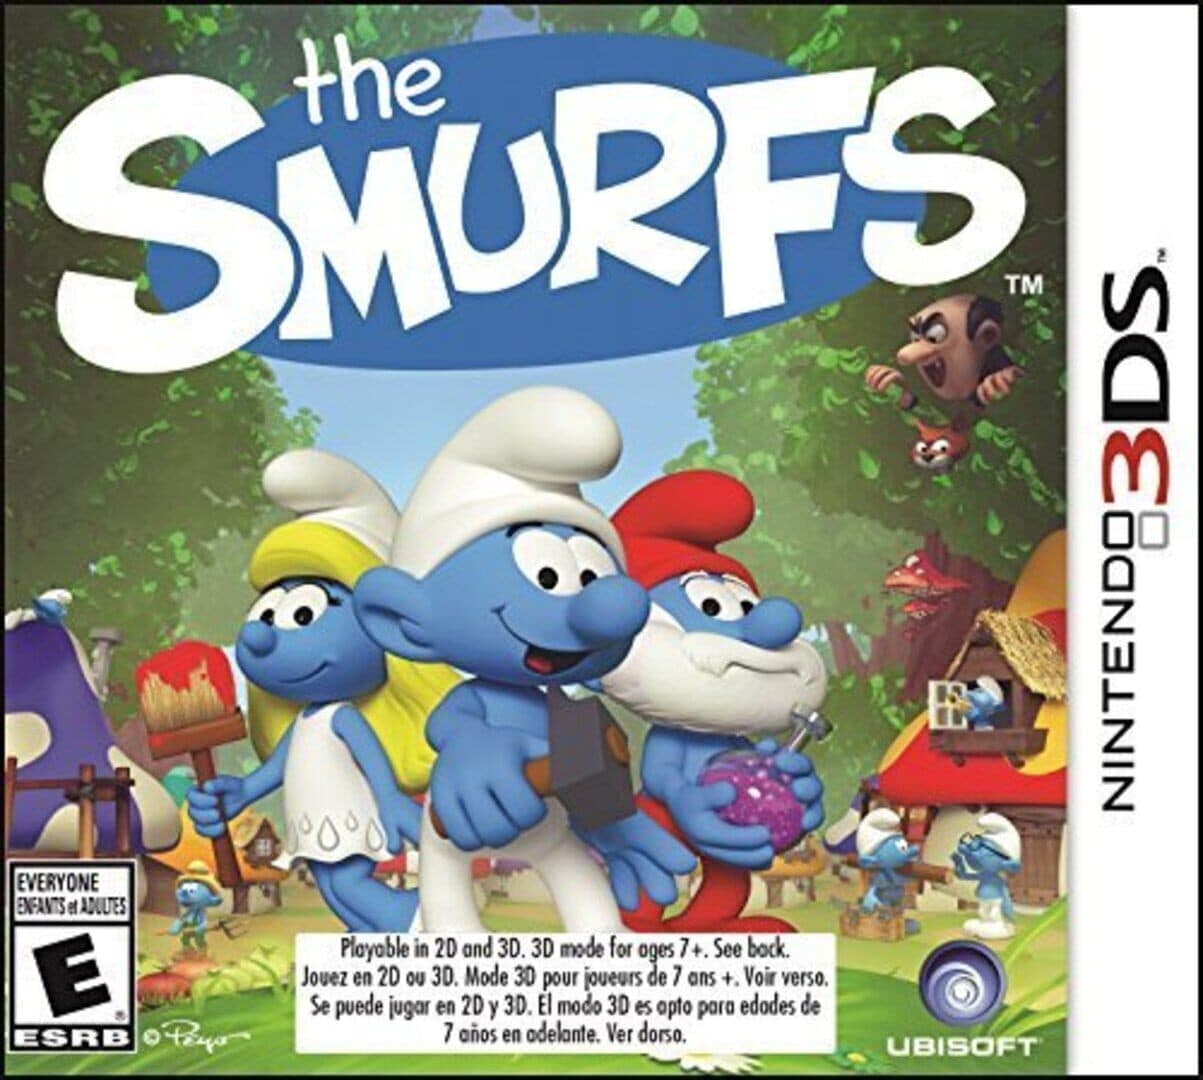 The Smurfs cover art